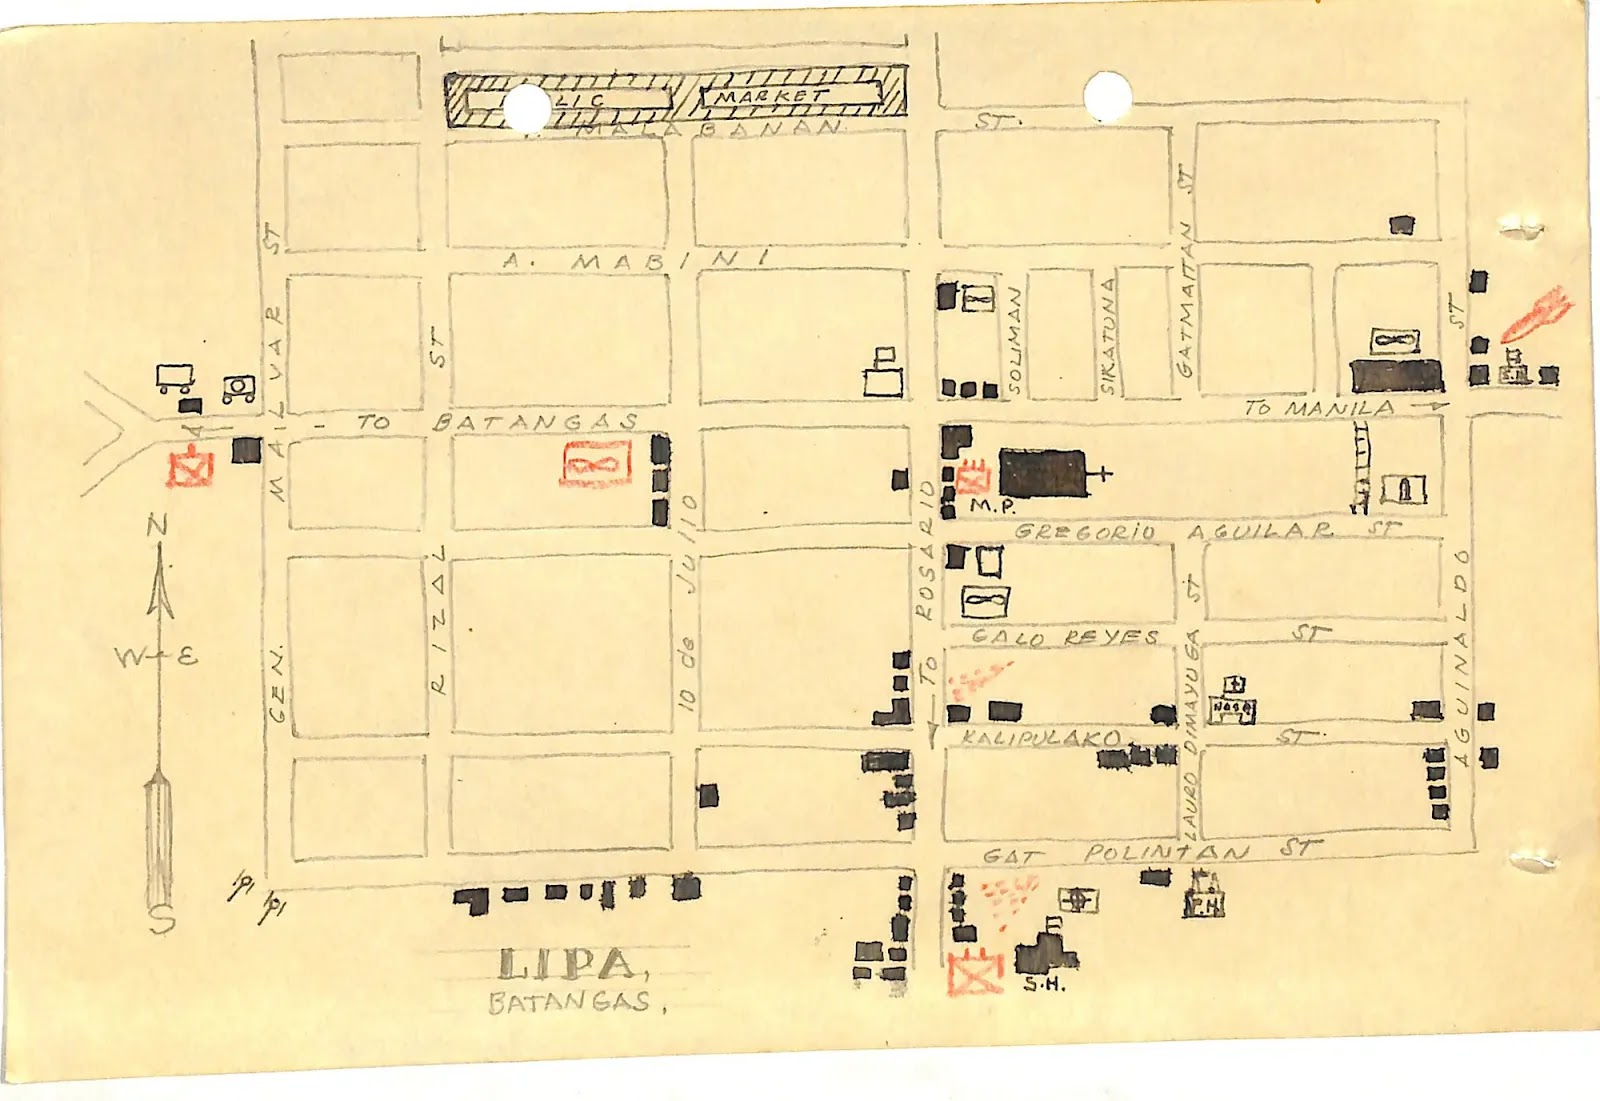 Guerrilla sketch map of Poblacion Lipa, Batangas